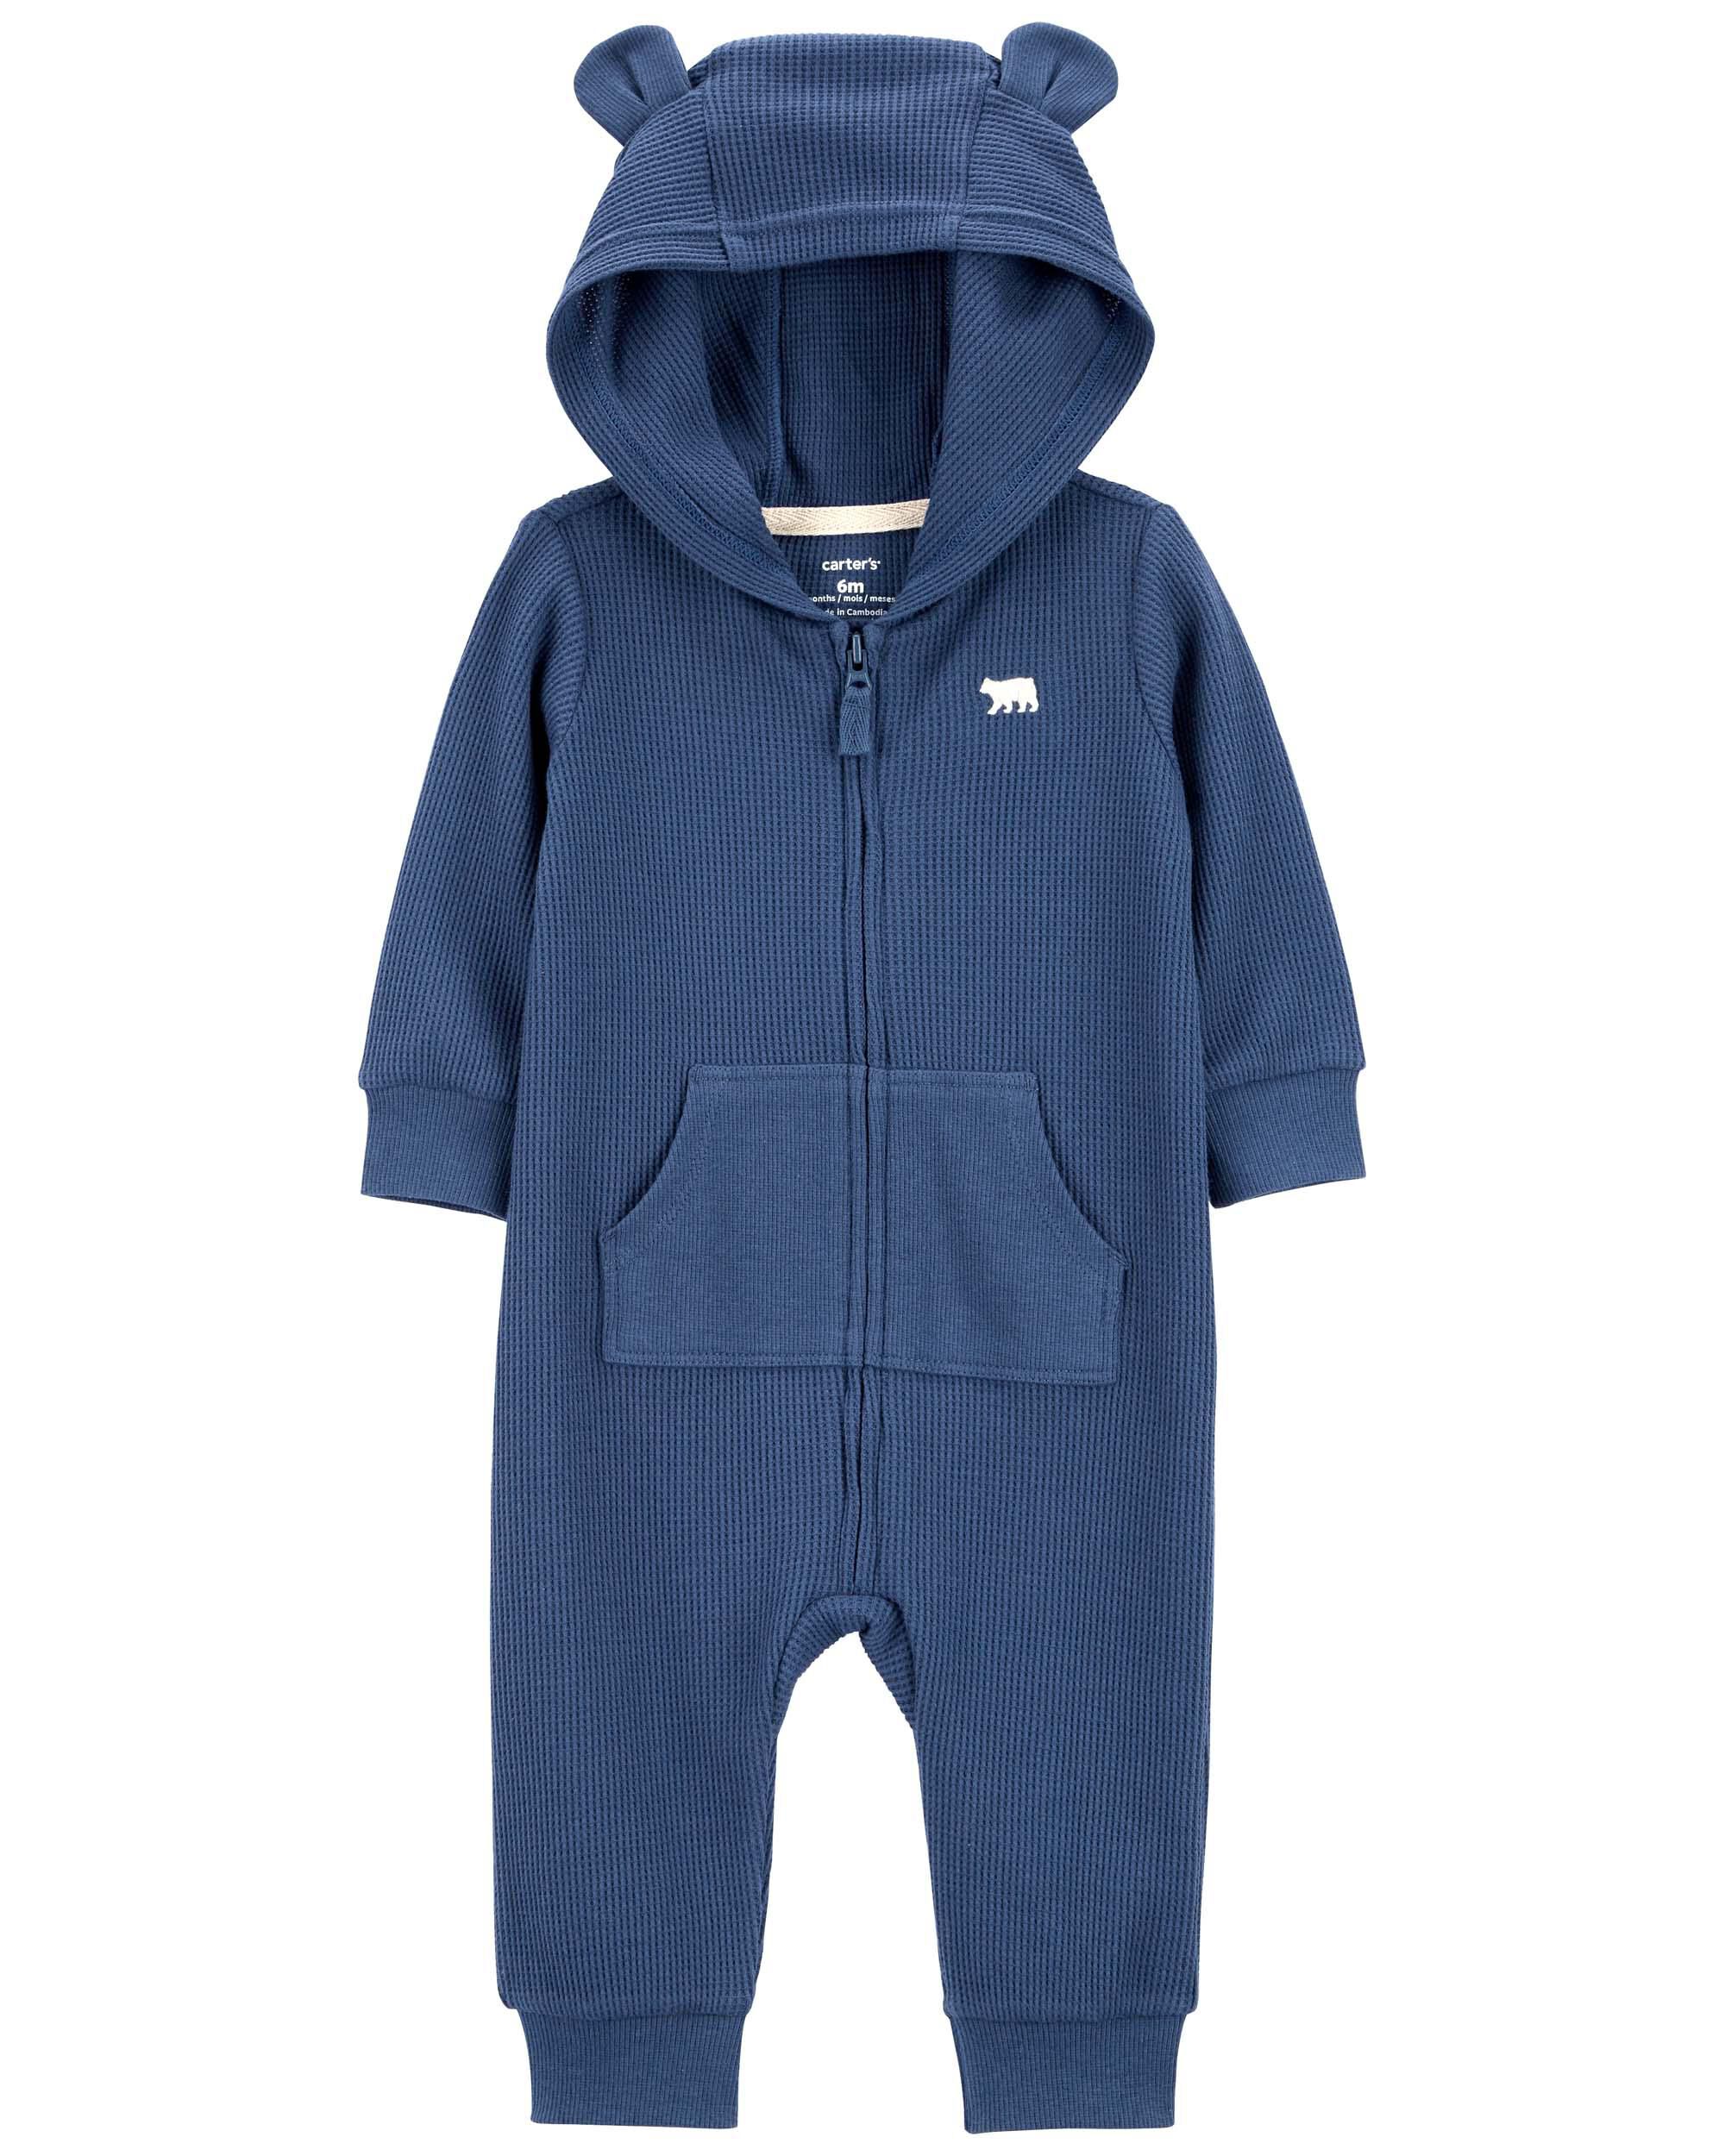 Carters Baby Boy 9, 12, 18, 24 Months 2 fleece Sets Hooded Romper Jumpsuit  | eBay